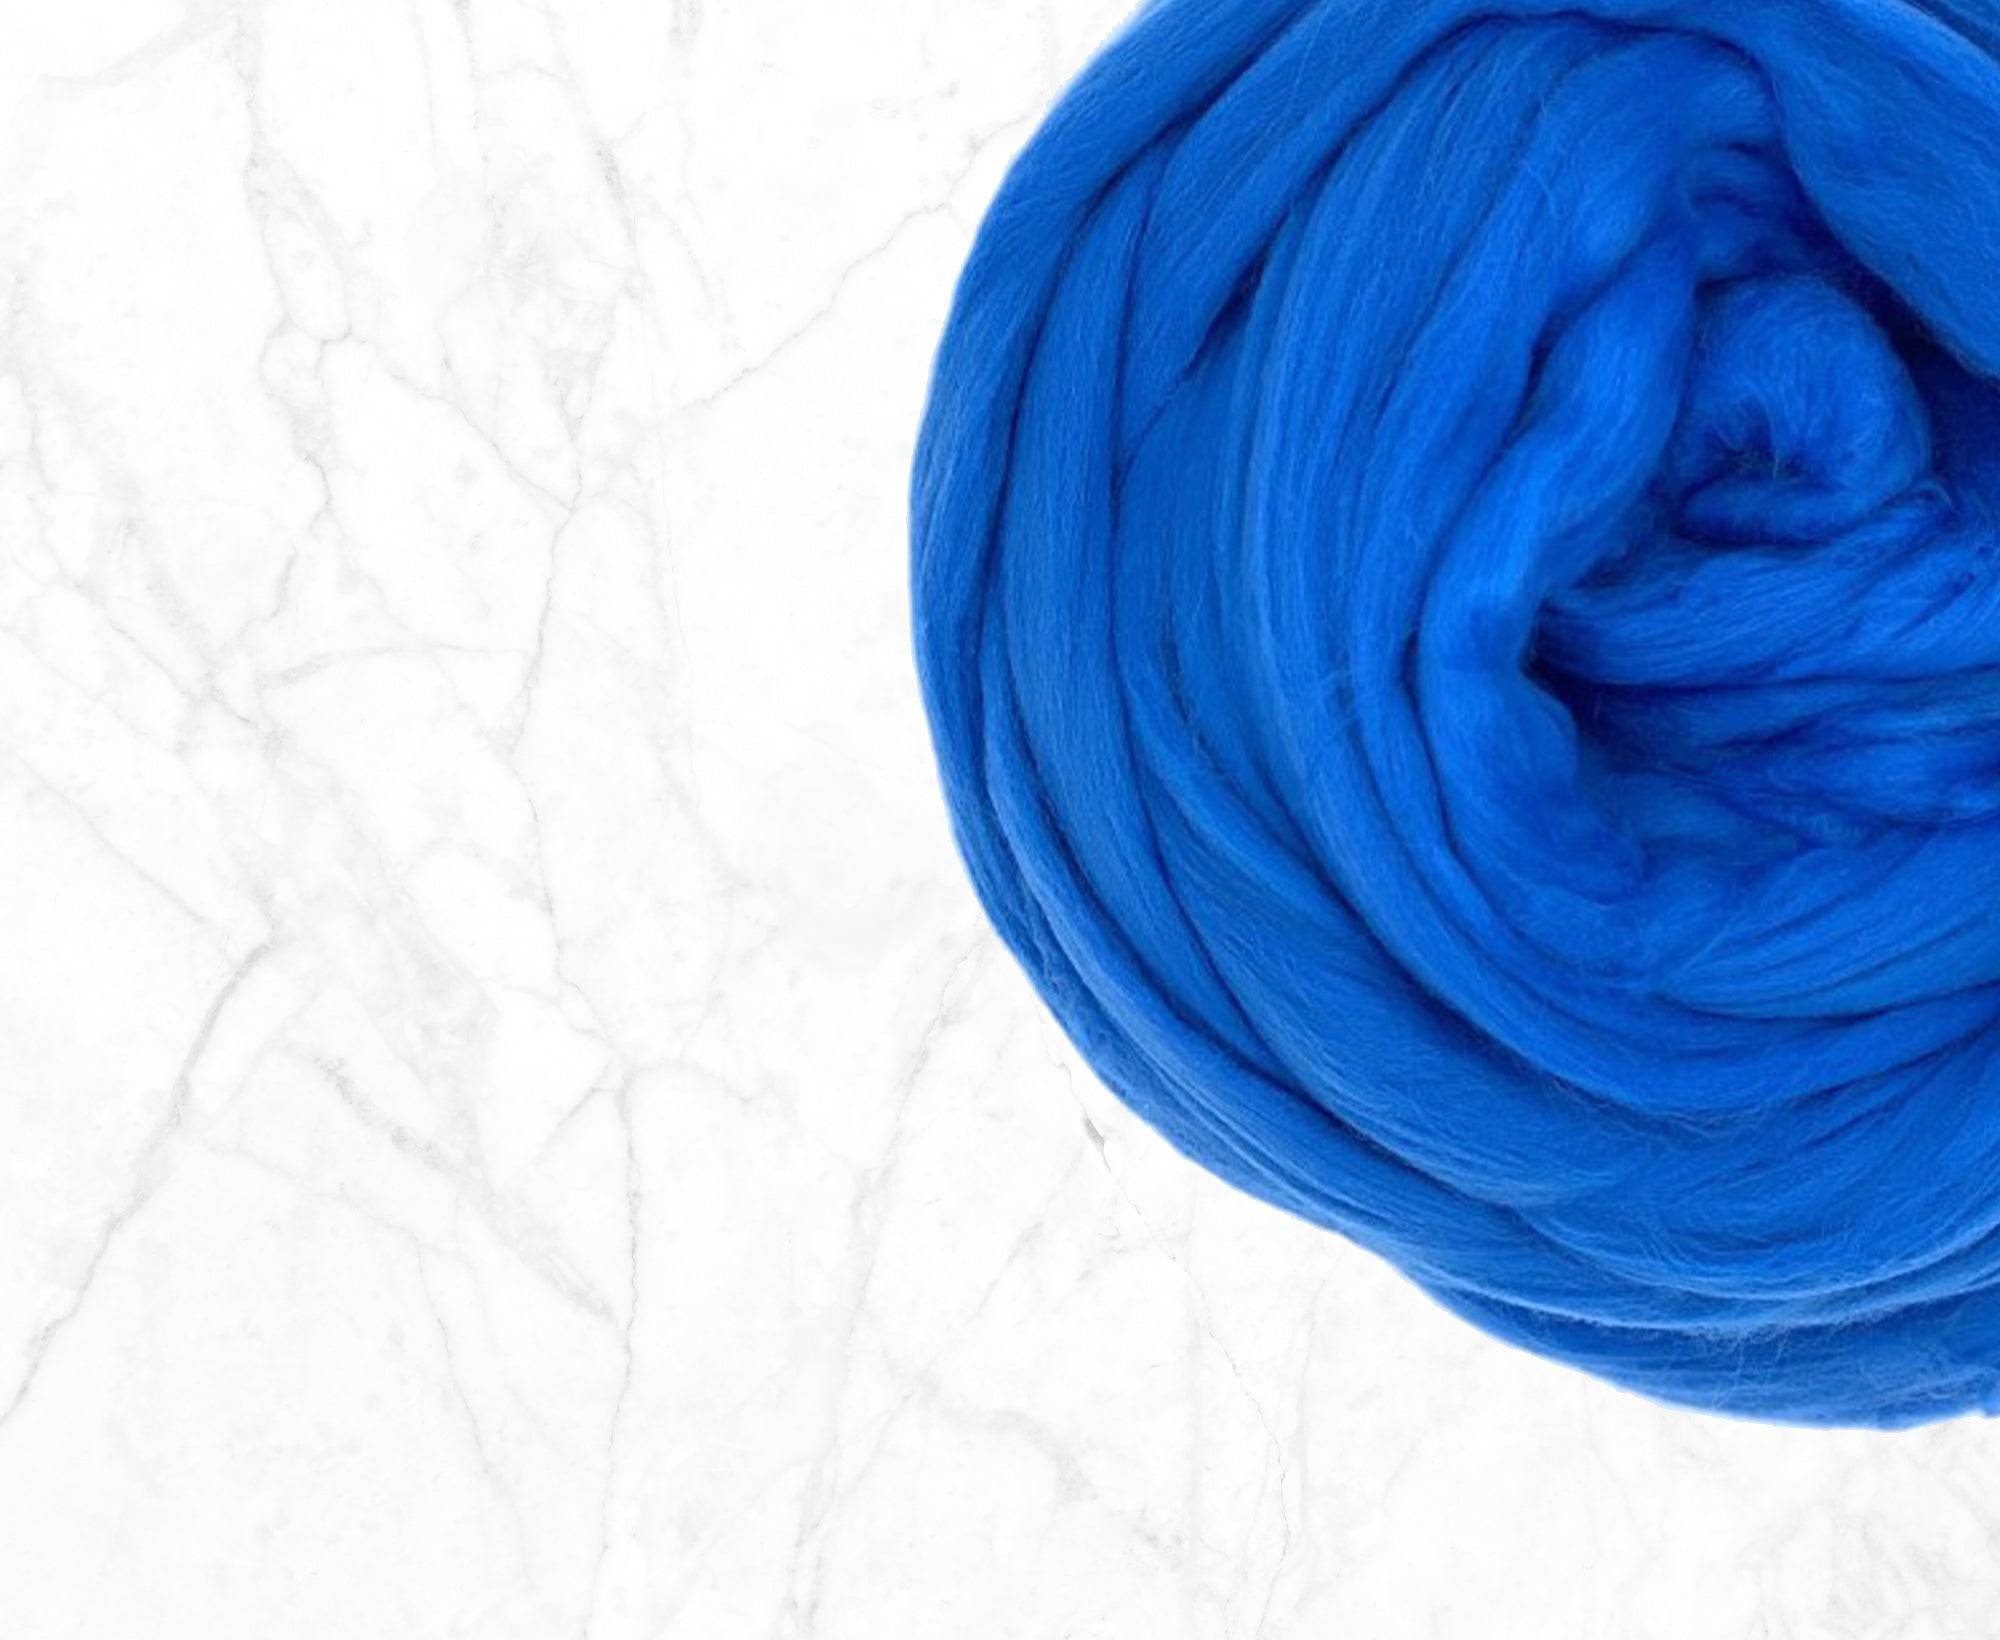 Bio-Nylon Marina Jumbo Yarn - World of Wool